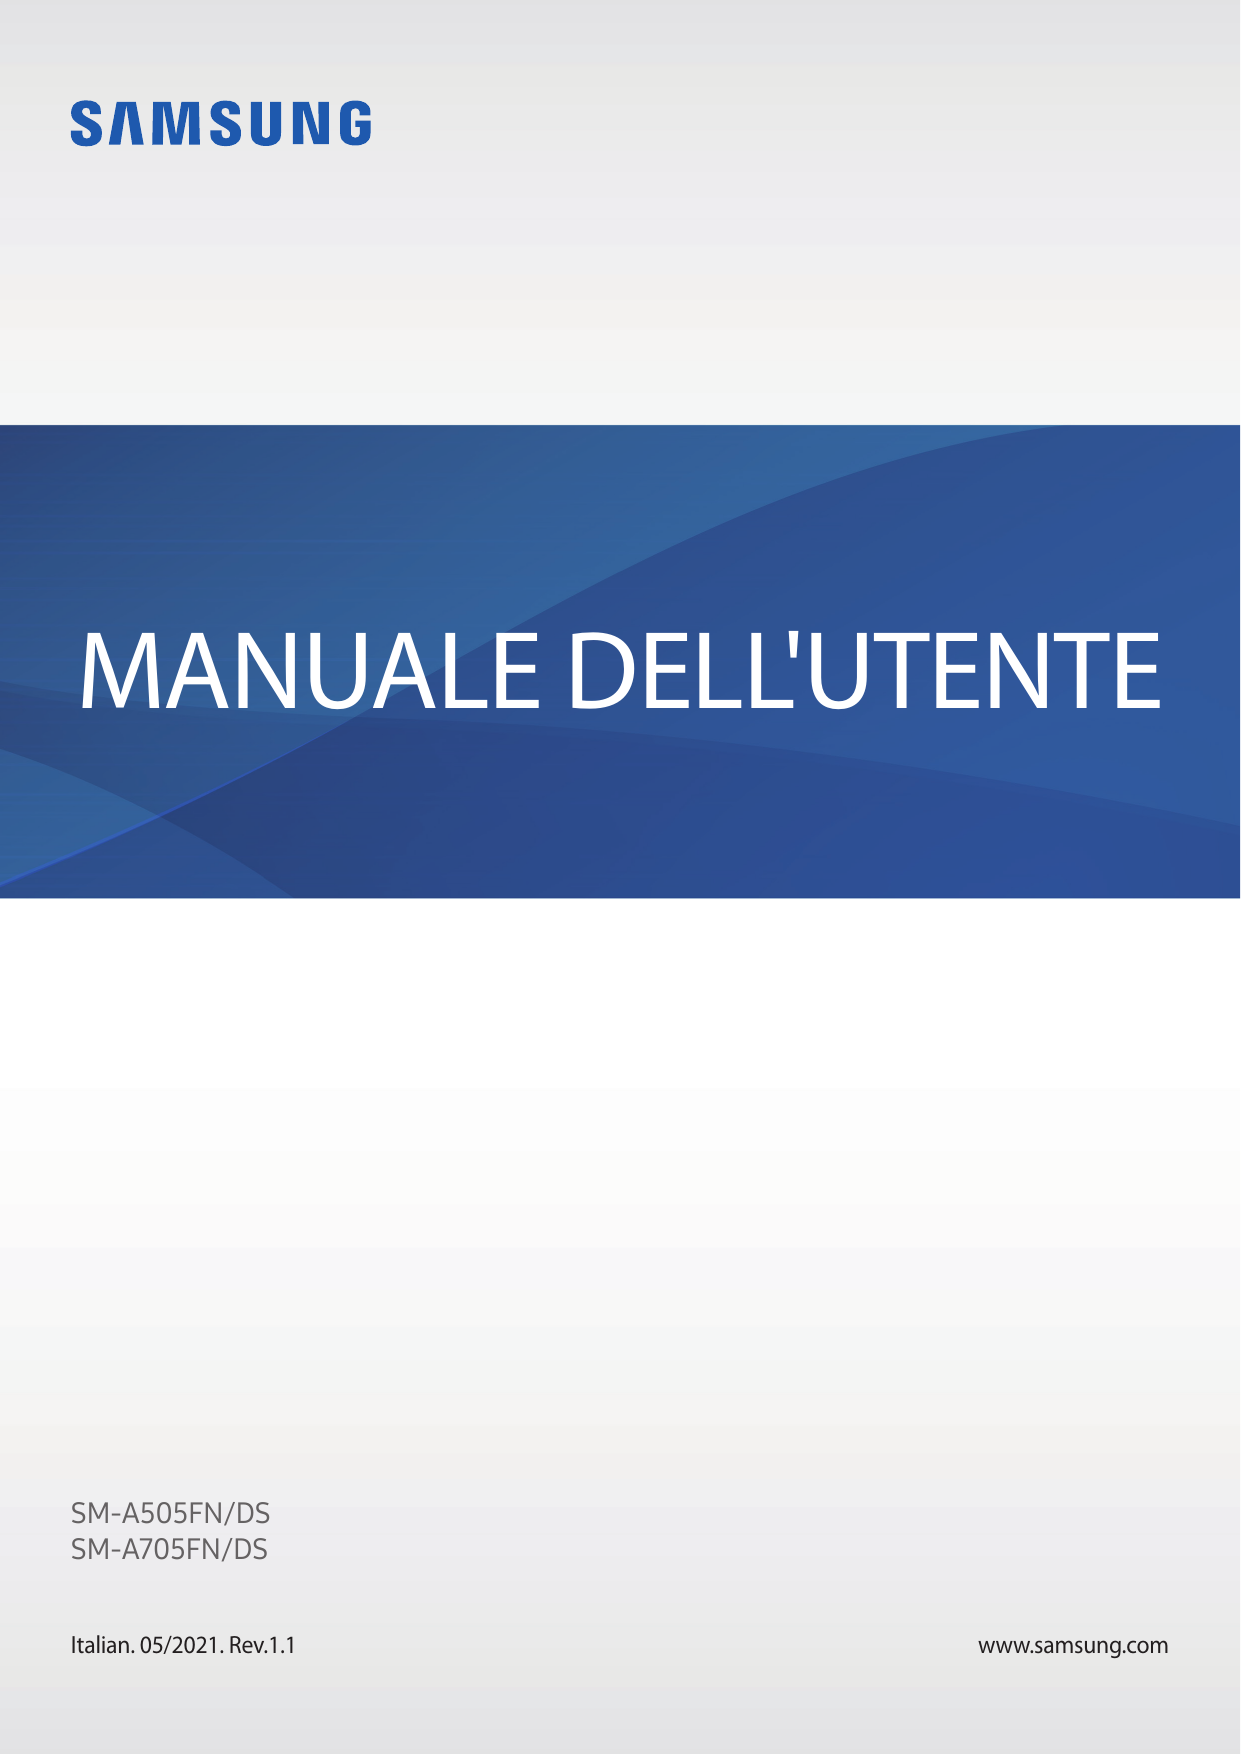 MANUALE DELL'UTENTESM-A505FN/DSSM-A705FN/DSItalian. 05/2021. Rev.1.1www.samsung.com